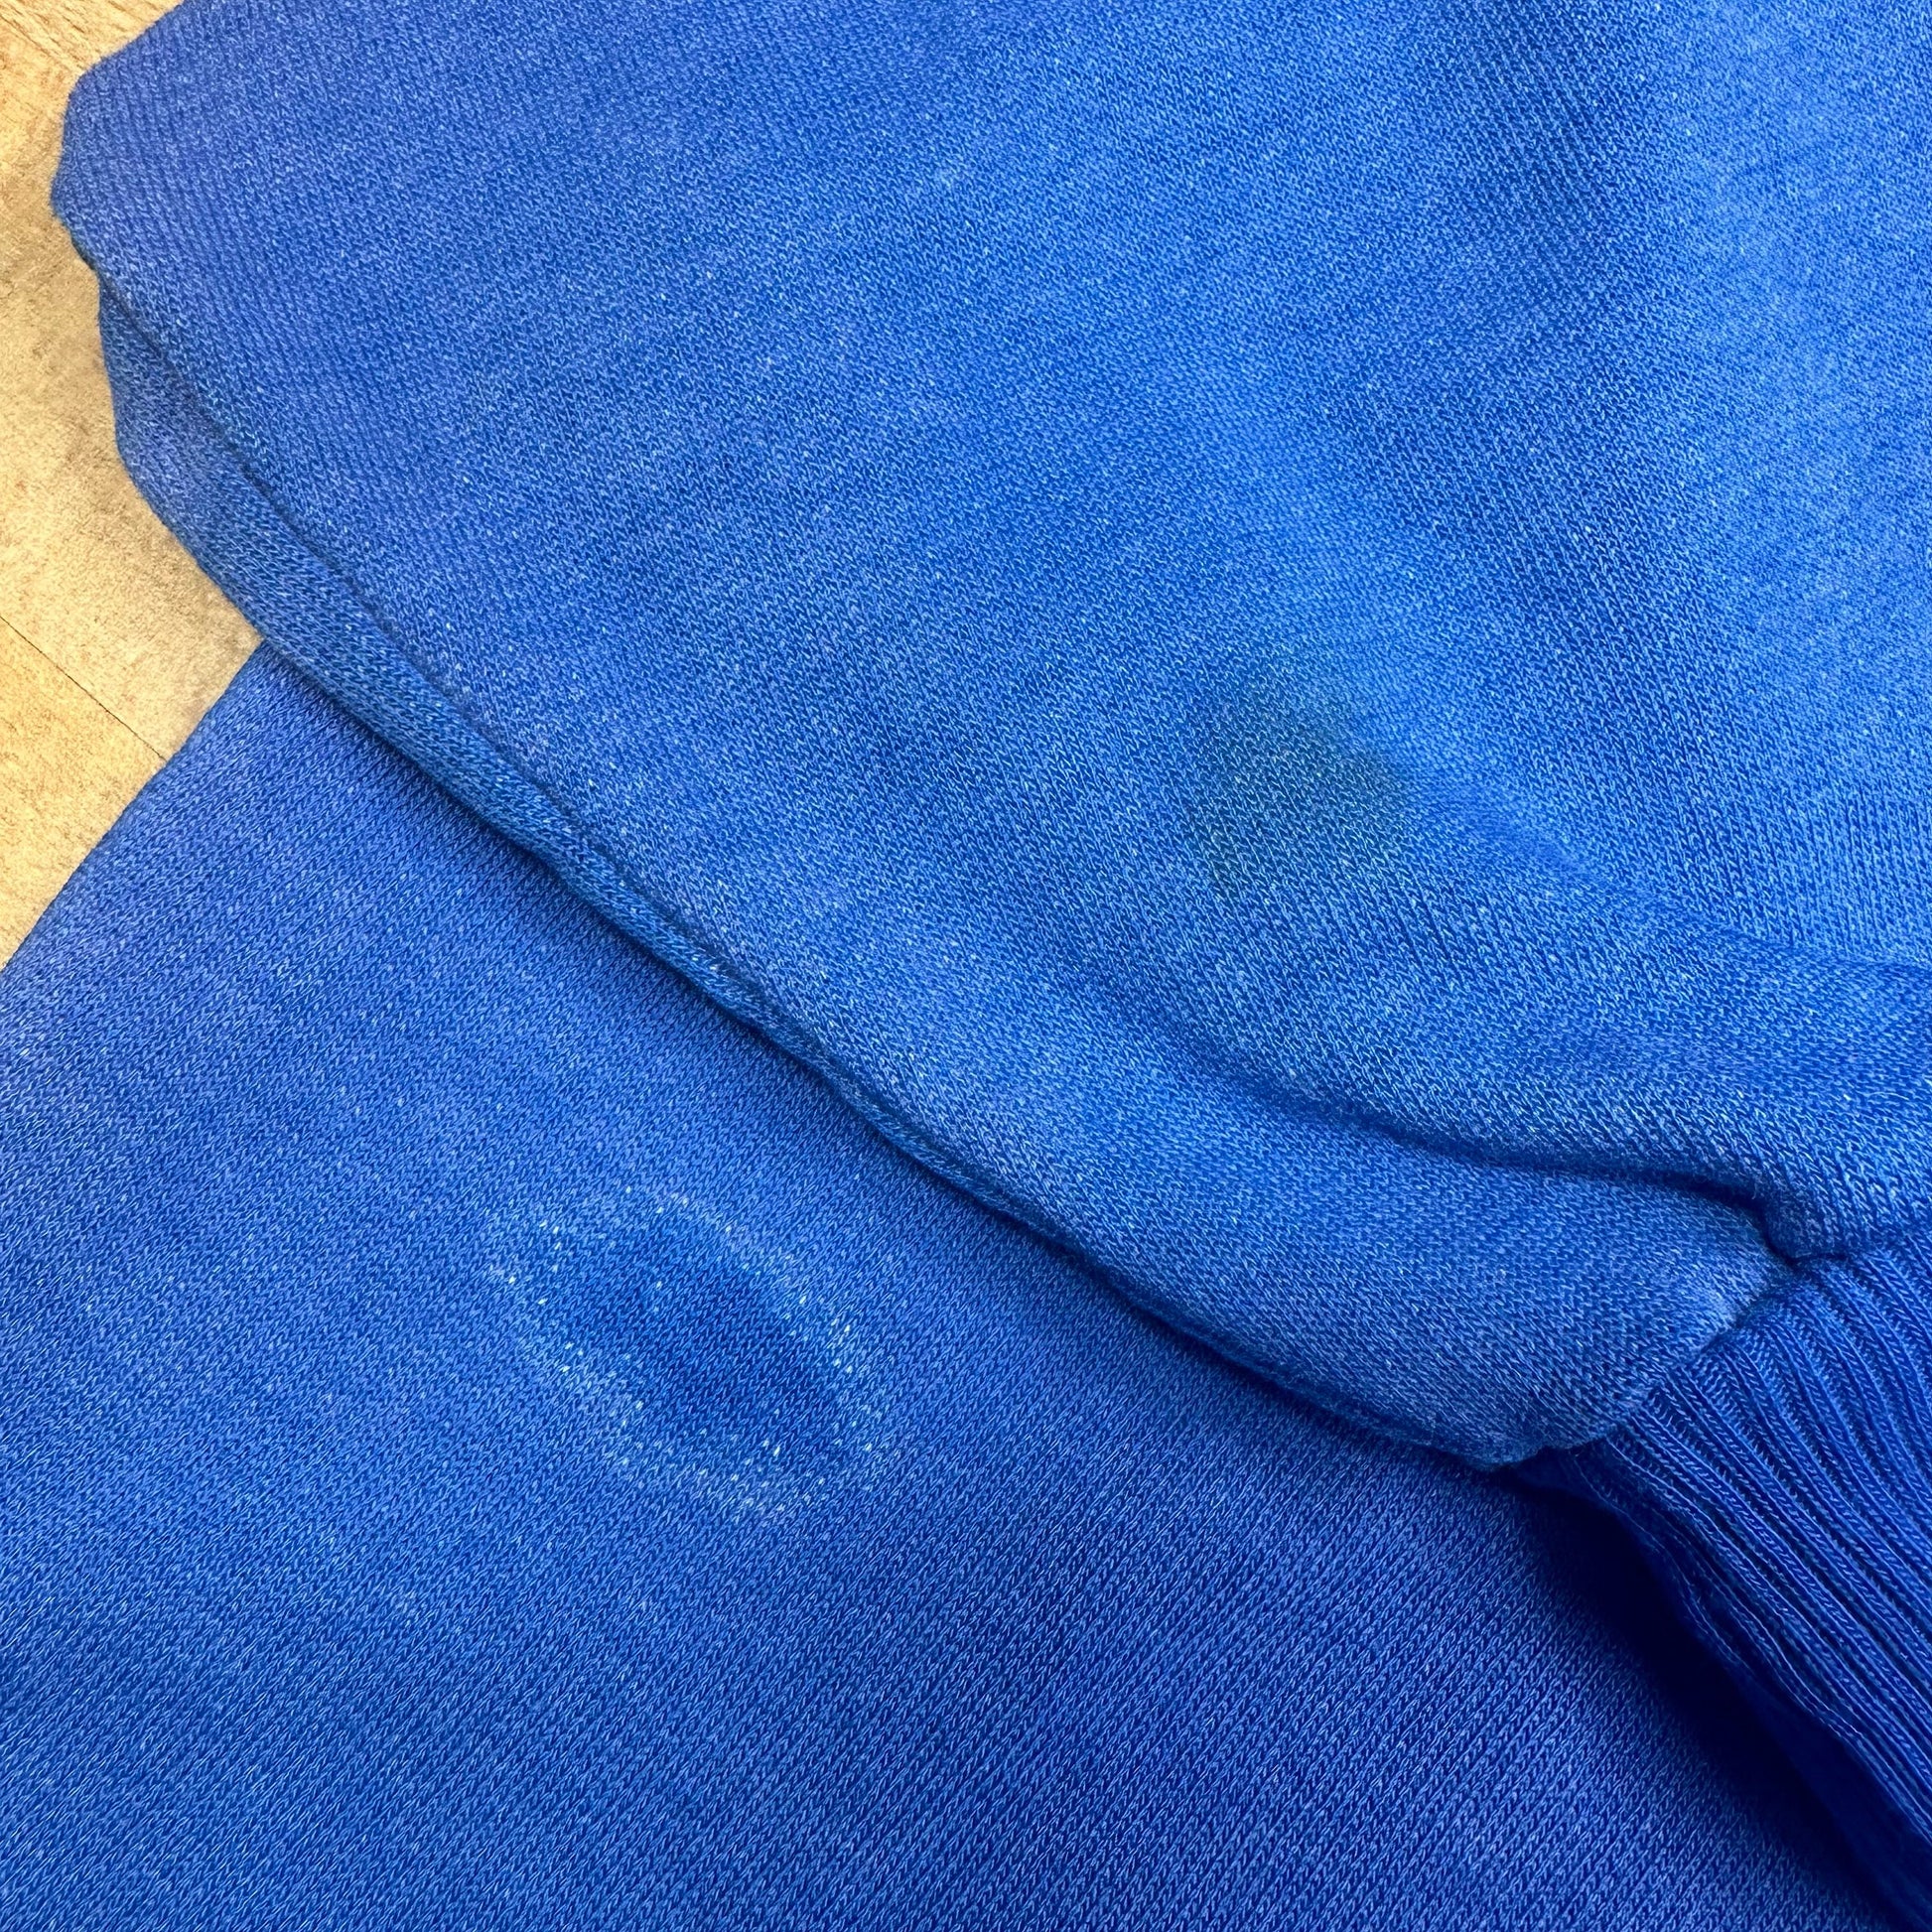 70s 80s Collared Raglan Sweatshirt - Extra Large | Vintage Plain Blue Grunge Lightweight Pullover